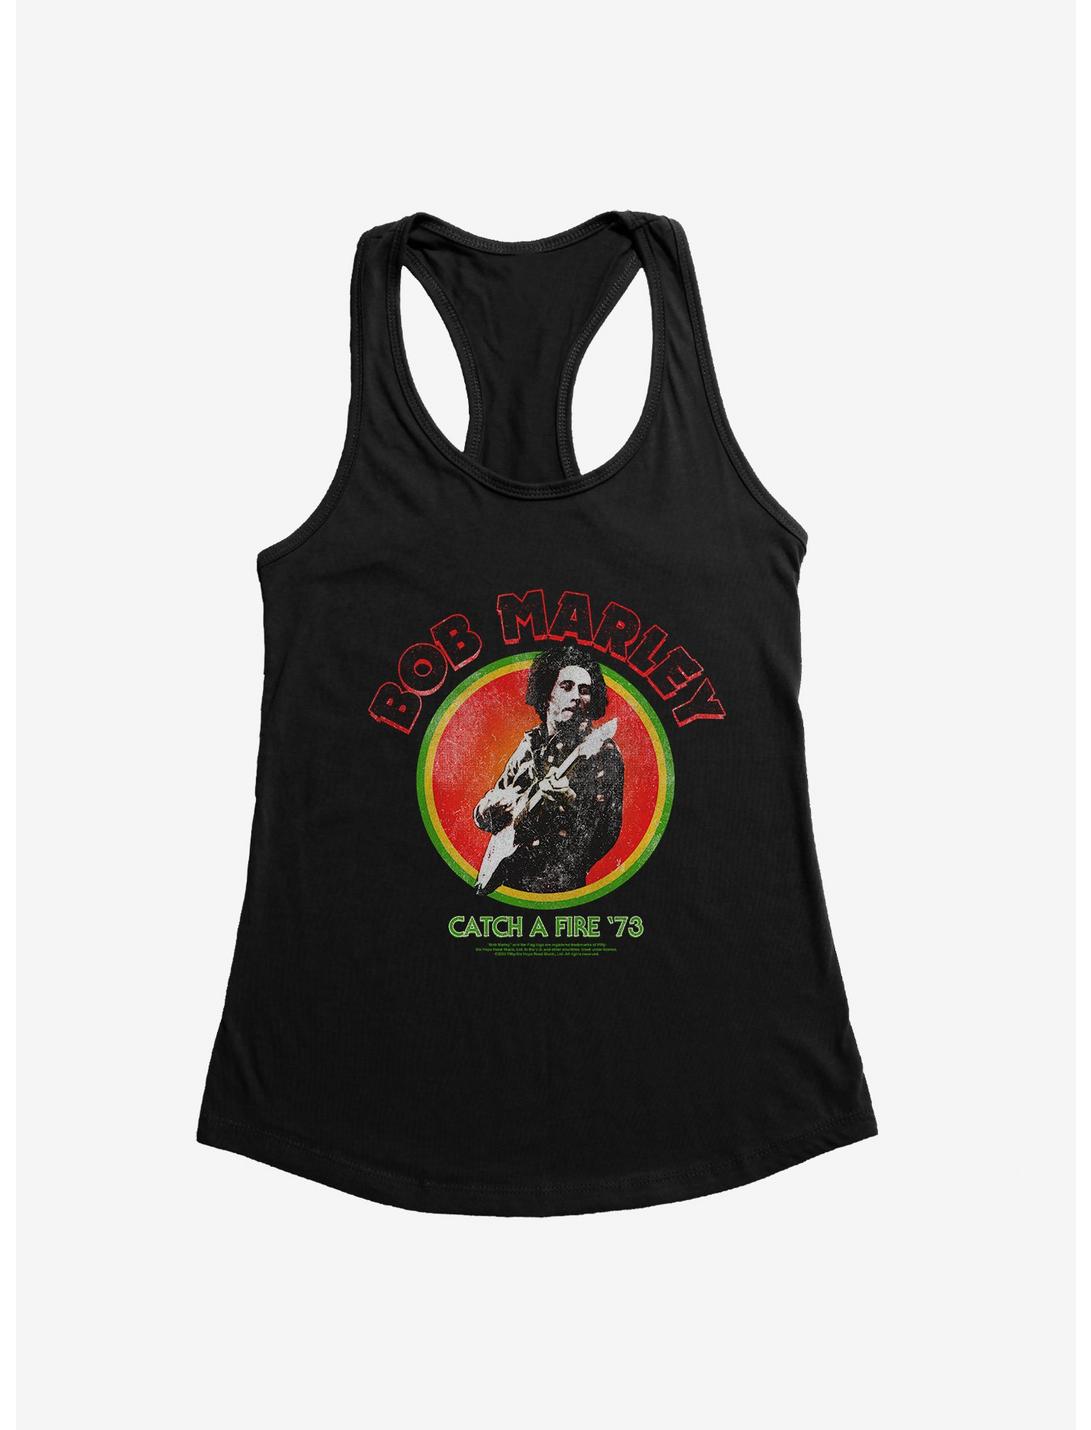 Bob Marley Catch A Fire '73 Girls Tank, BLACK, hi-res